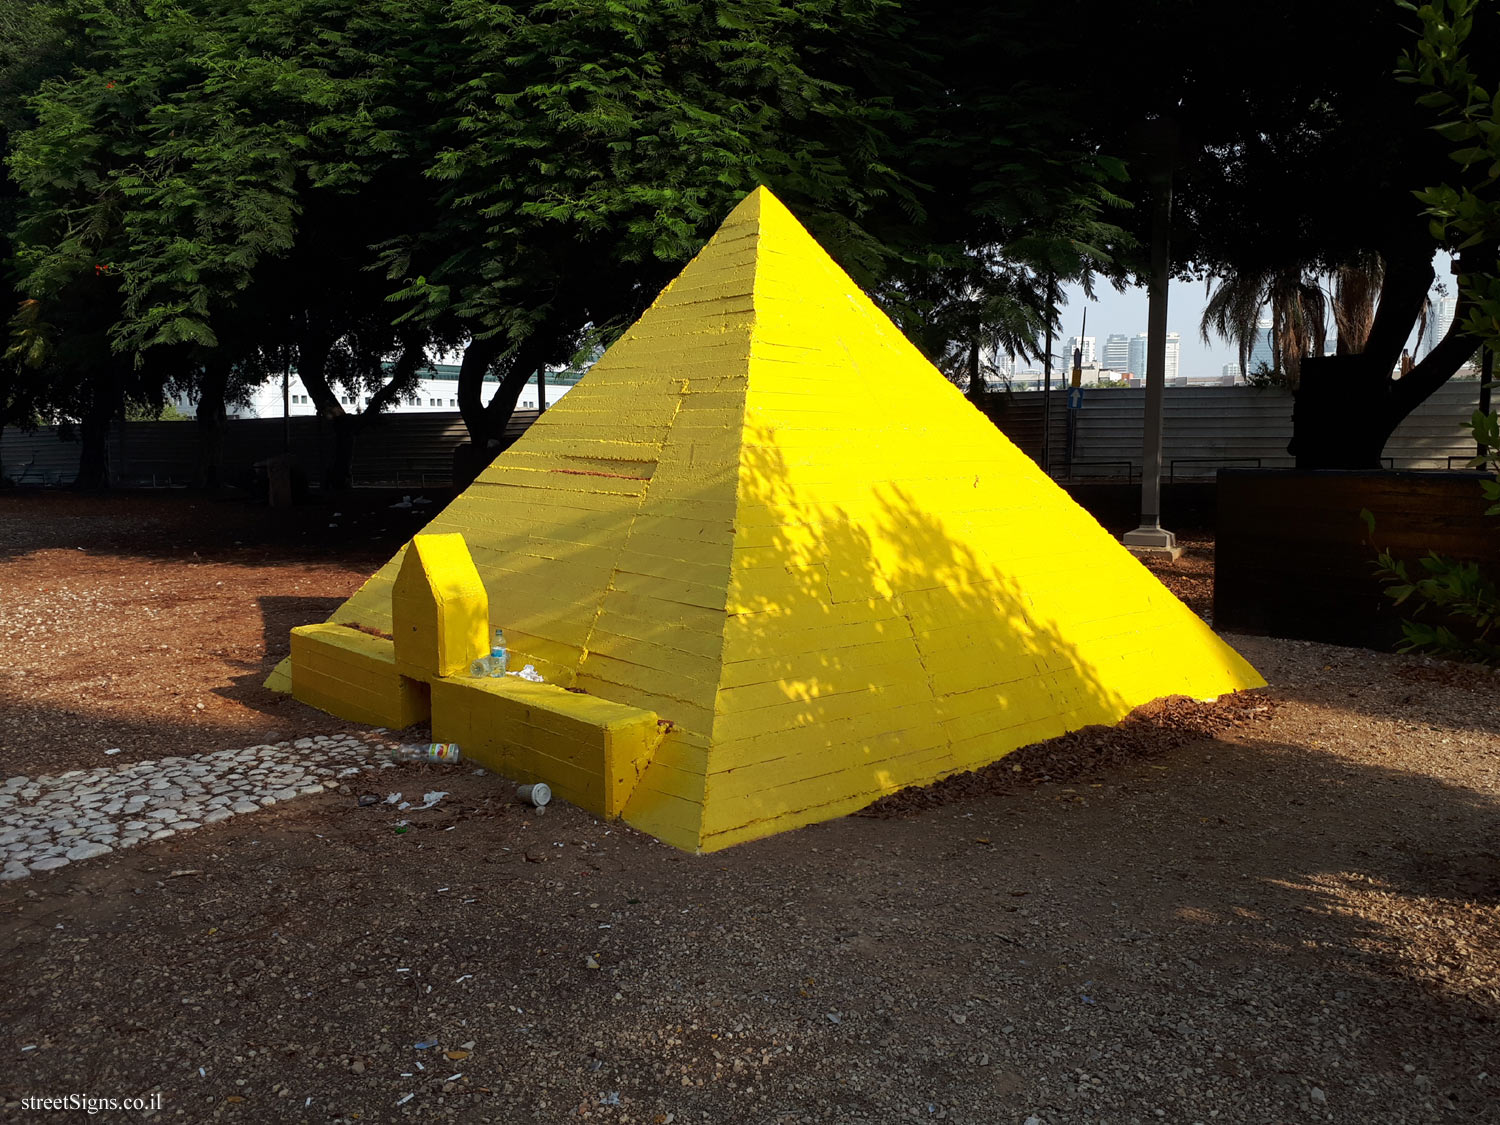 Tel Aviv - Tomarkin sculptures at Abu Nabot Park - Macht Arbeit Frei?